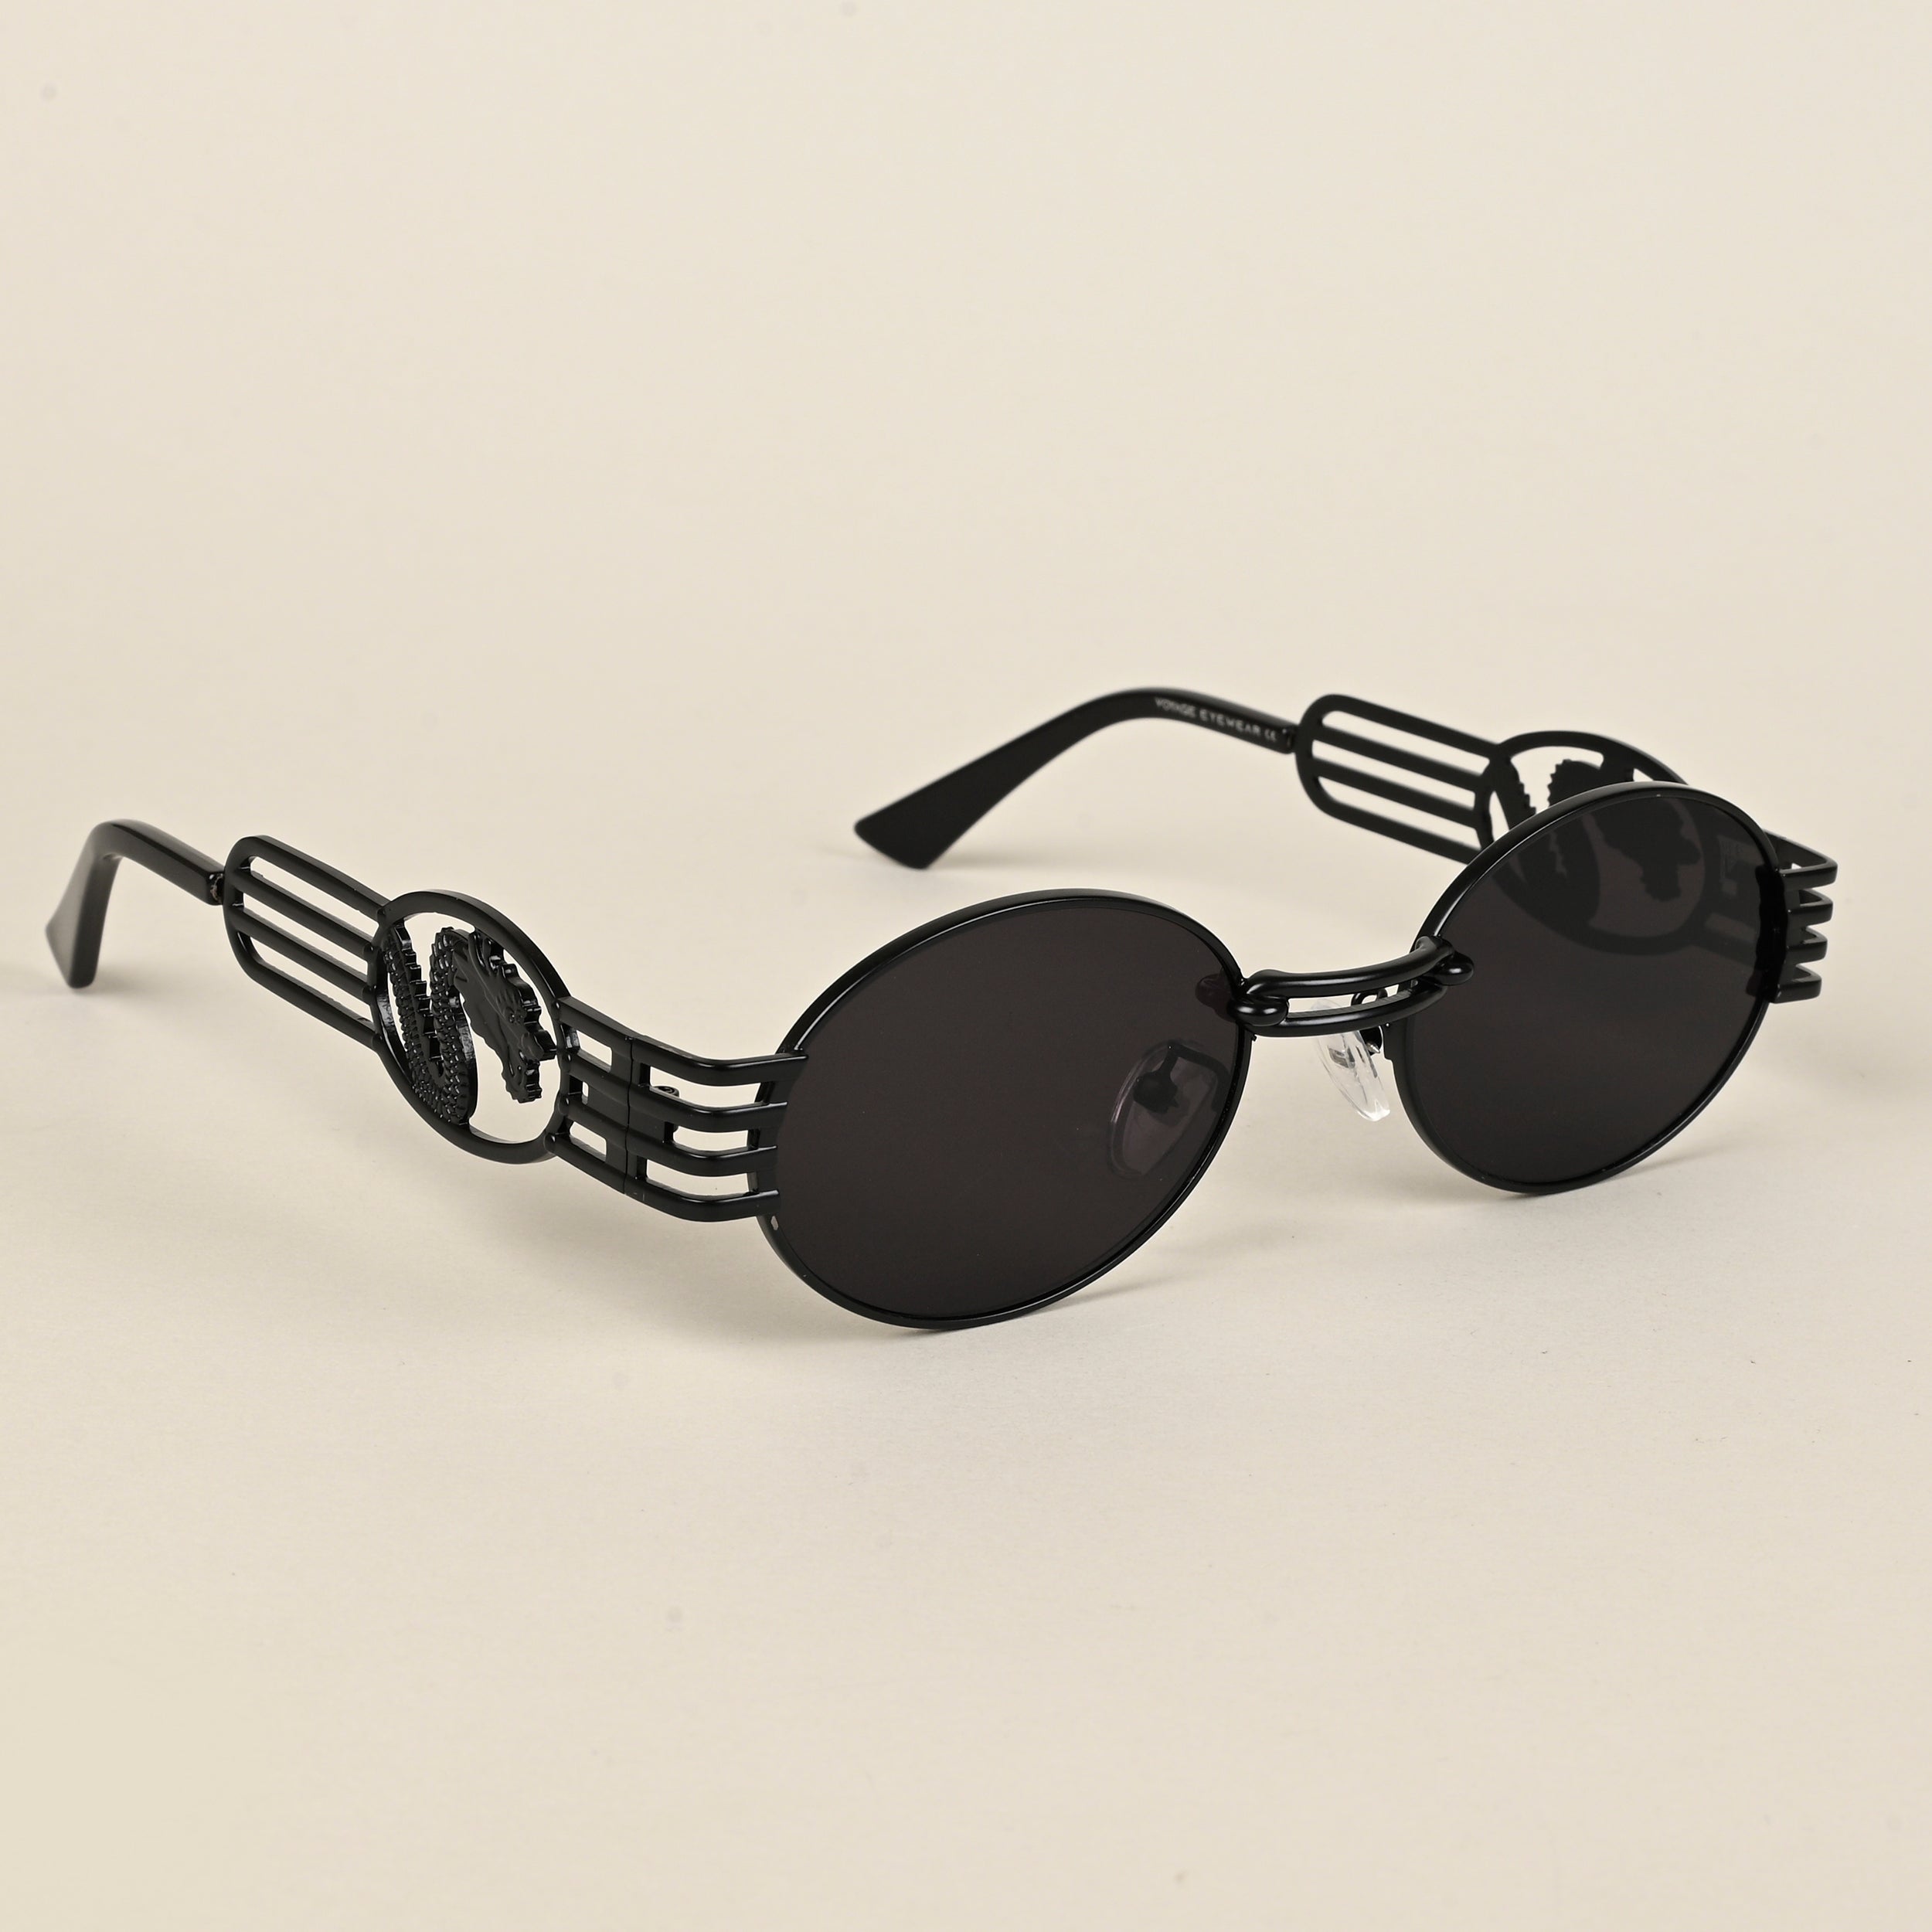 Voyage Oval Sunglasses for Women (Black Lens | Black Frame  - MG5190)